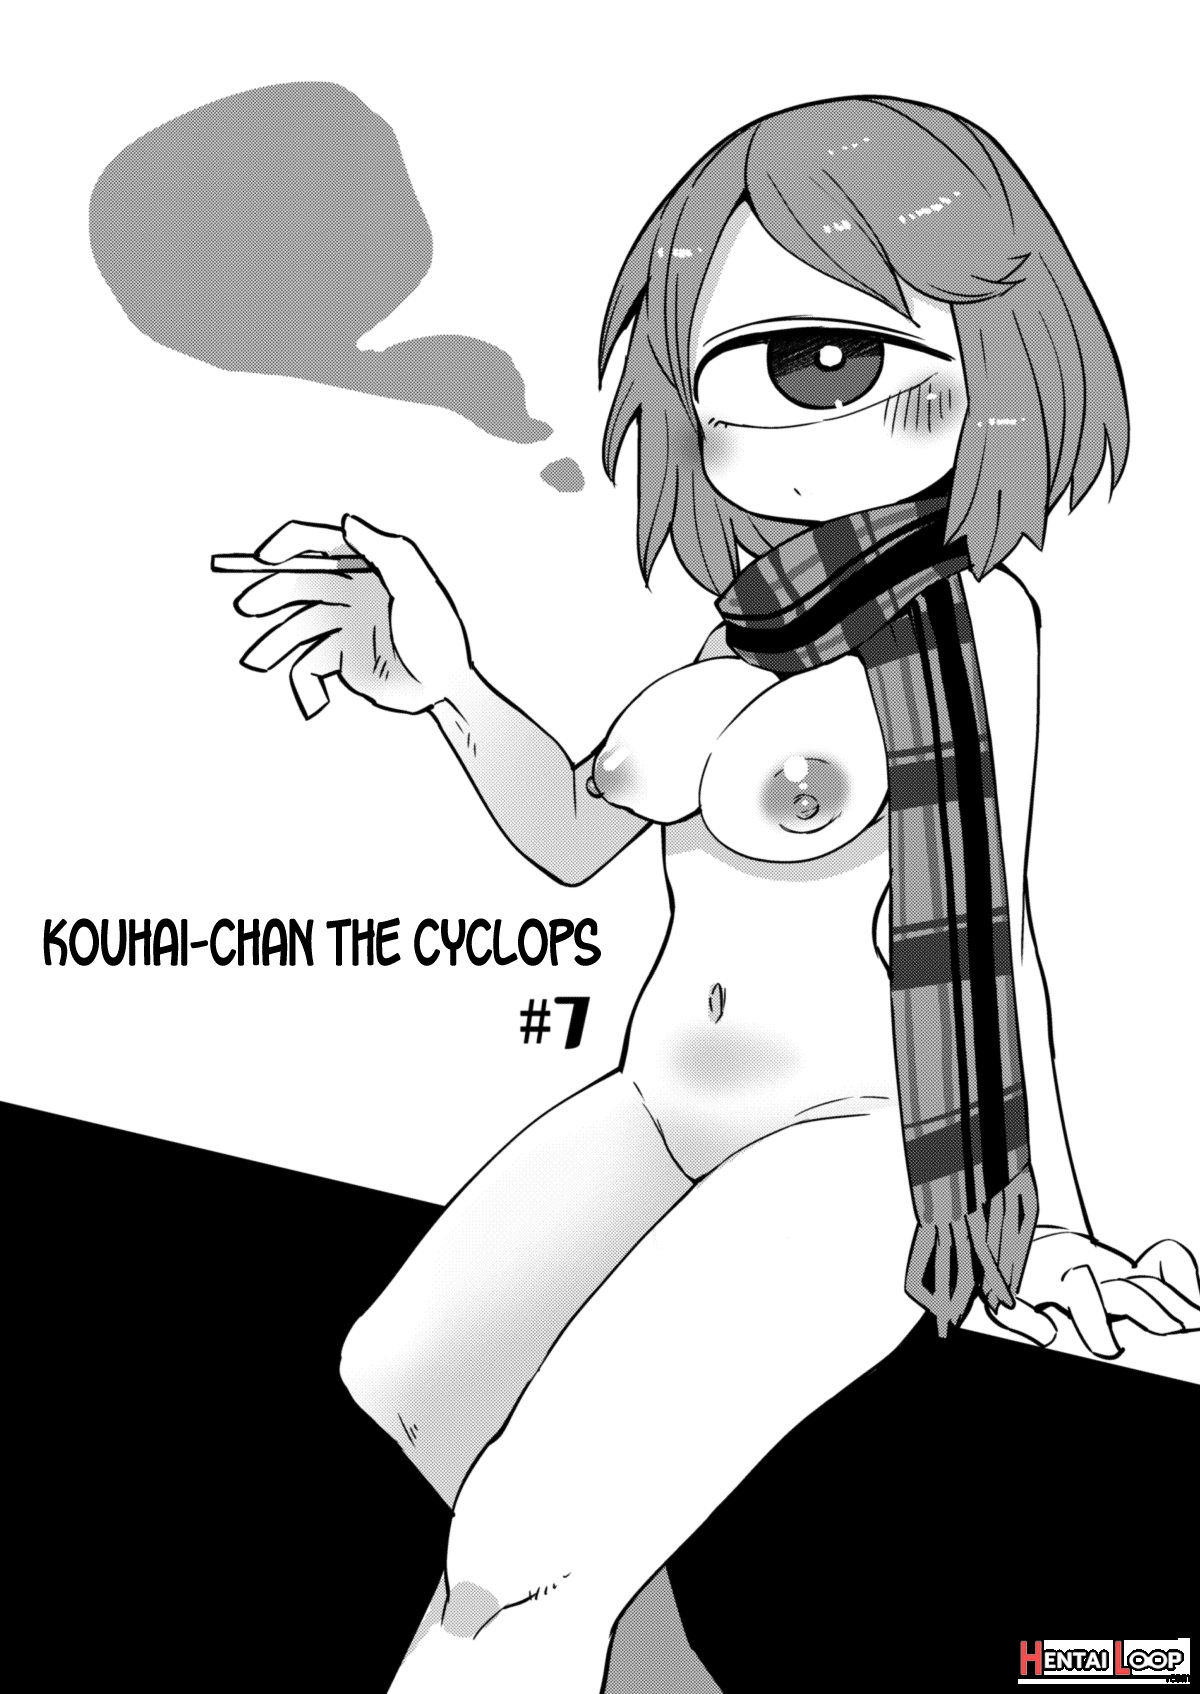 Kouhai-chan The Cyclops #7 page 2